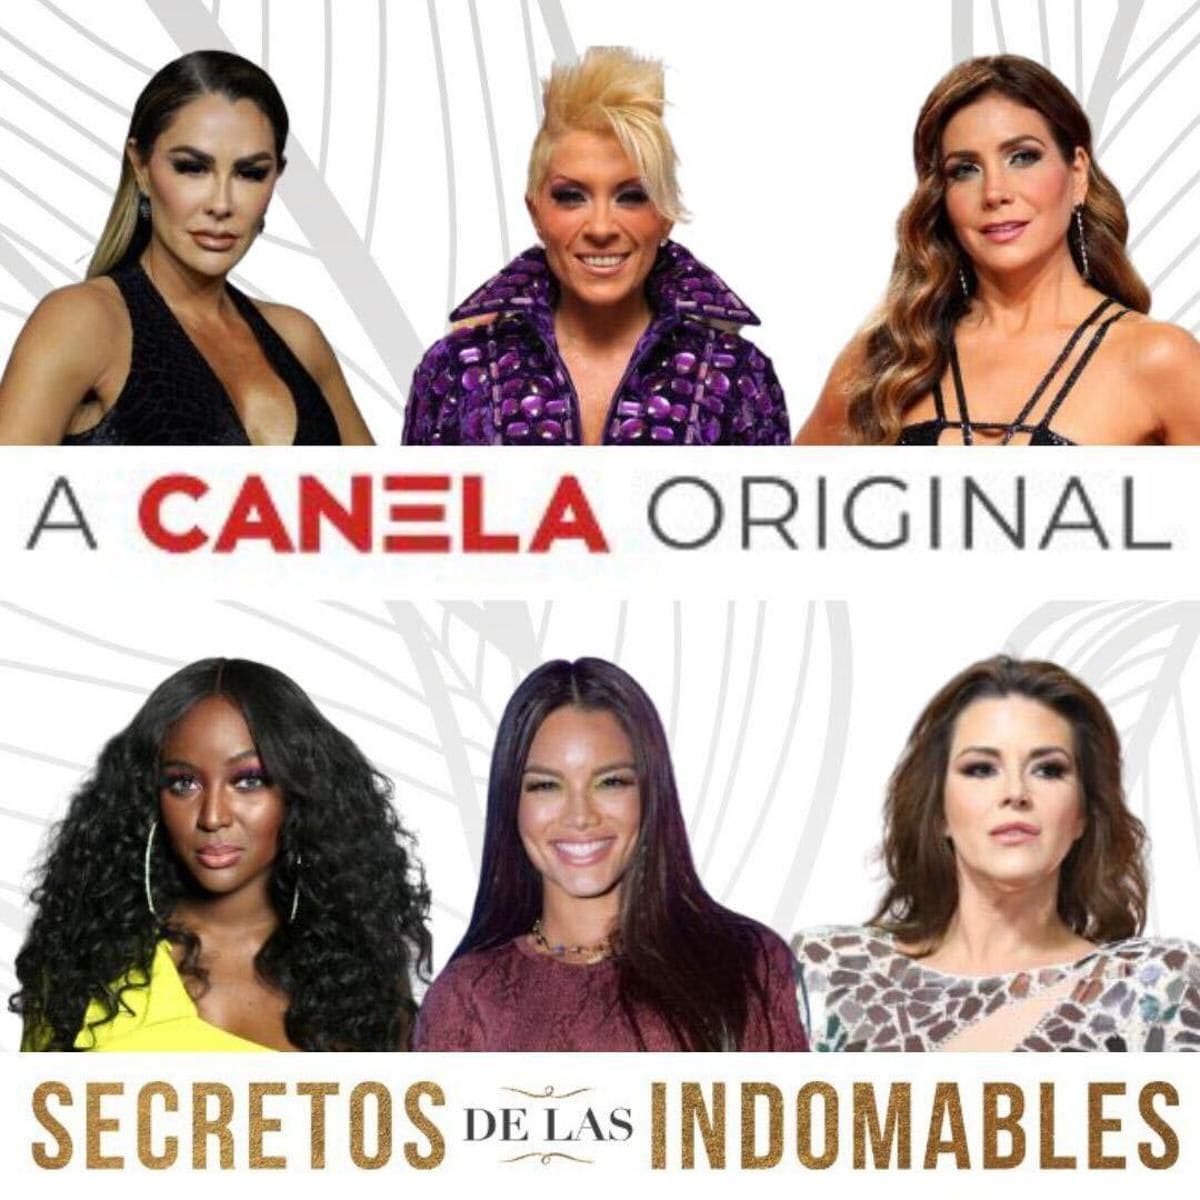 Canela.TV unveils all star cast for reality series ‘Secretos de las Indomables’